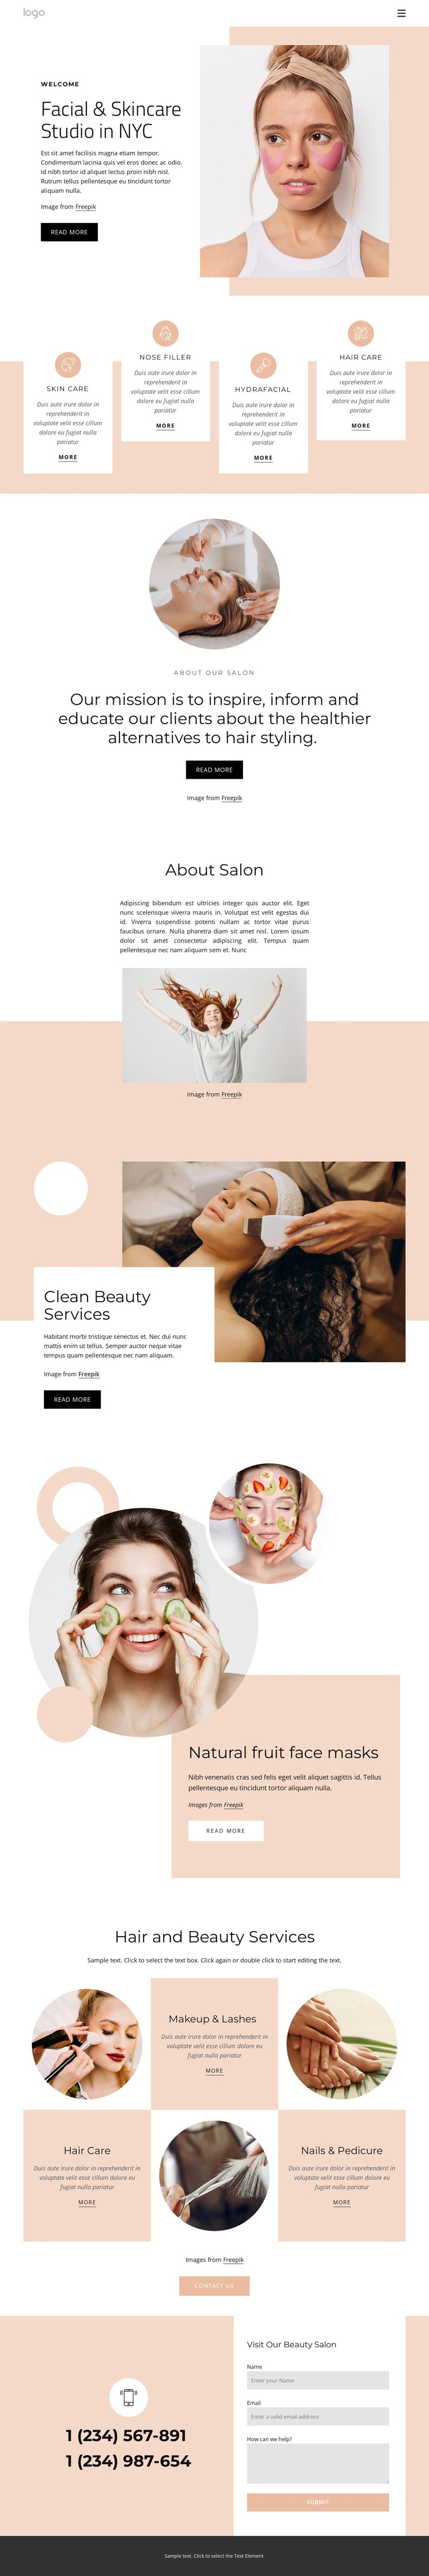 Facial beauty studio Web Design